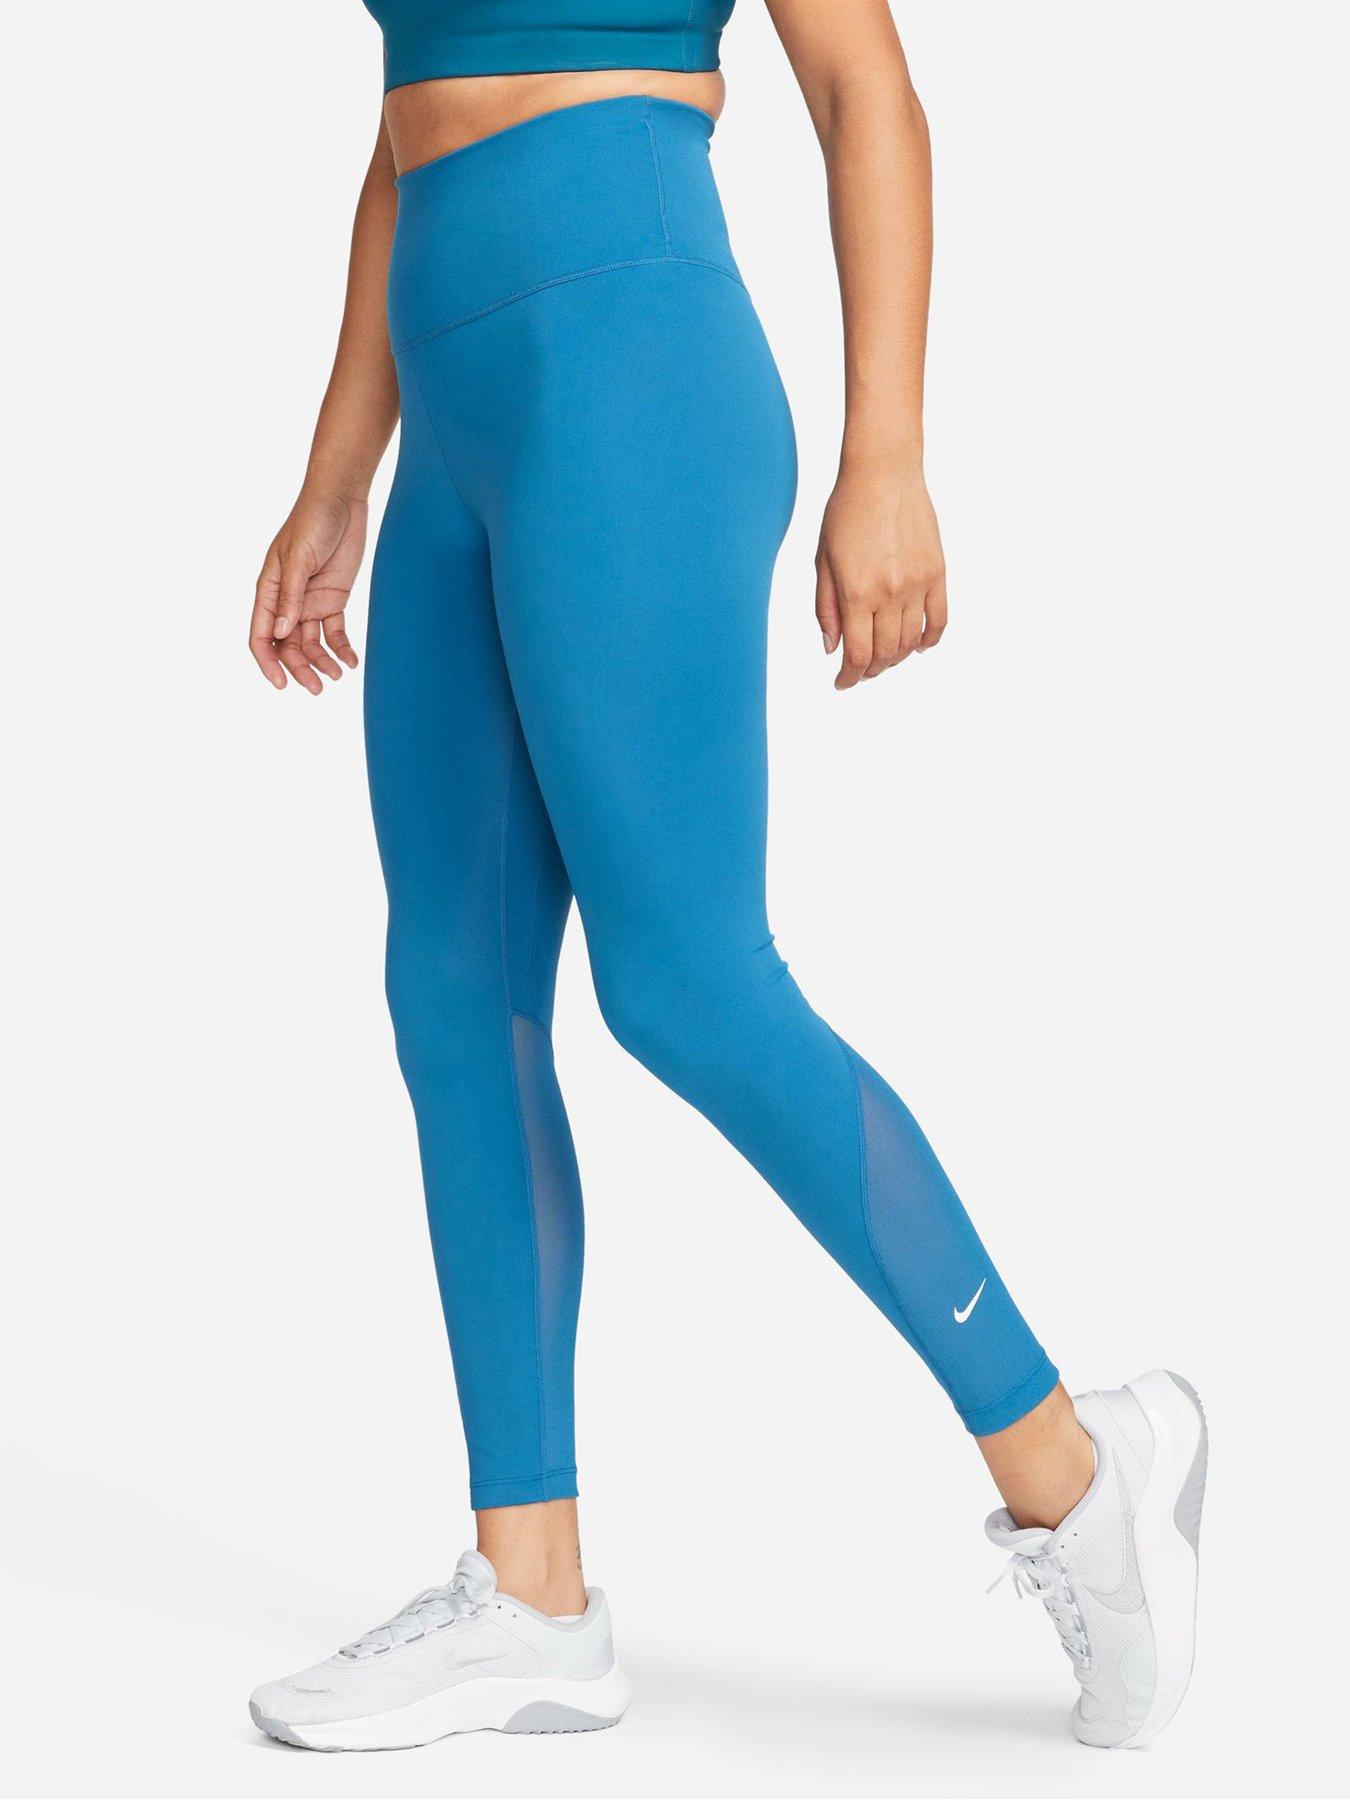 Nike Women's One High Rise 7/8 Legging - BLUE